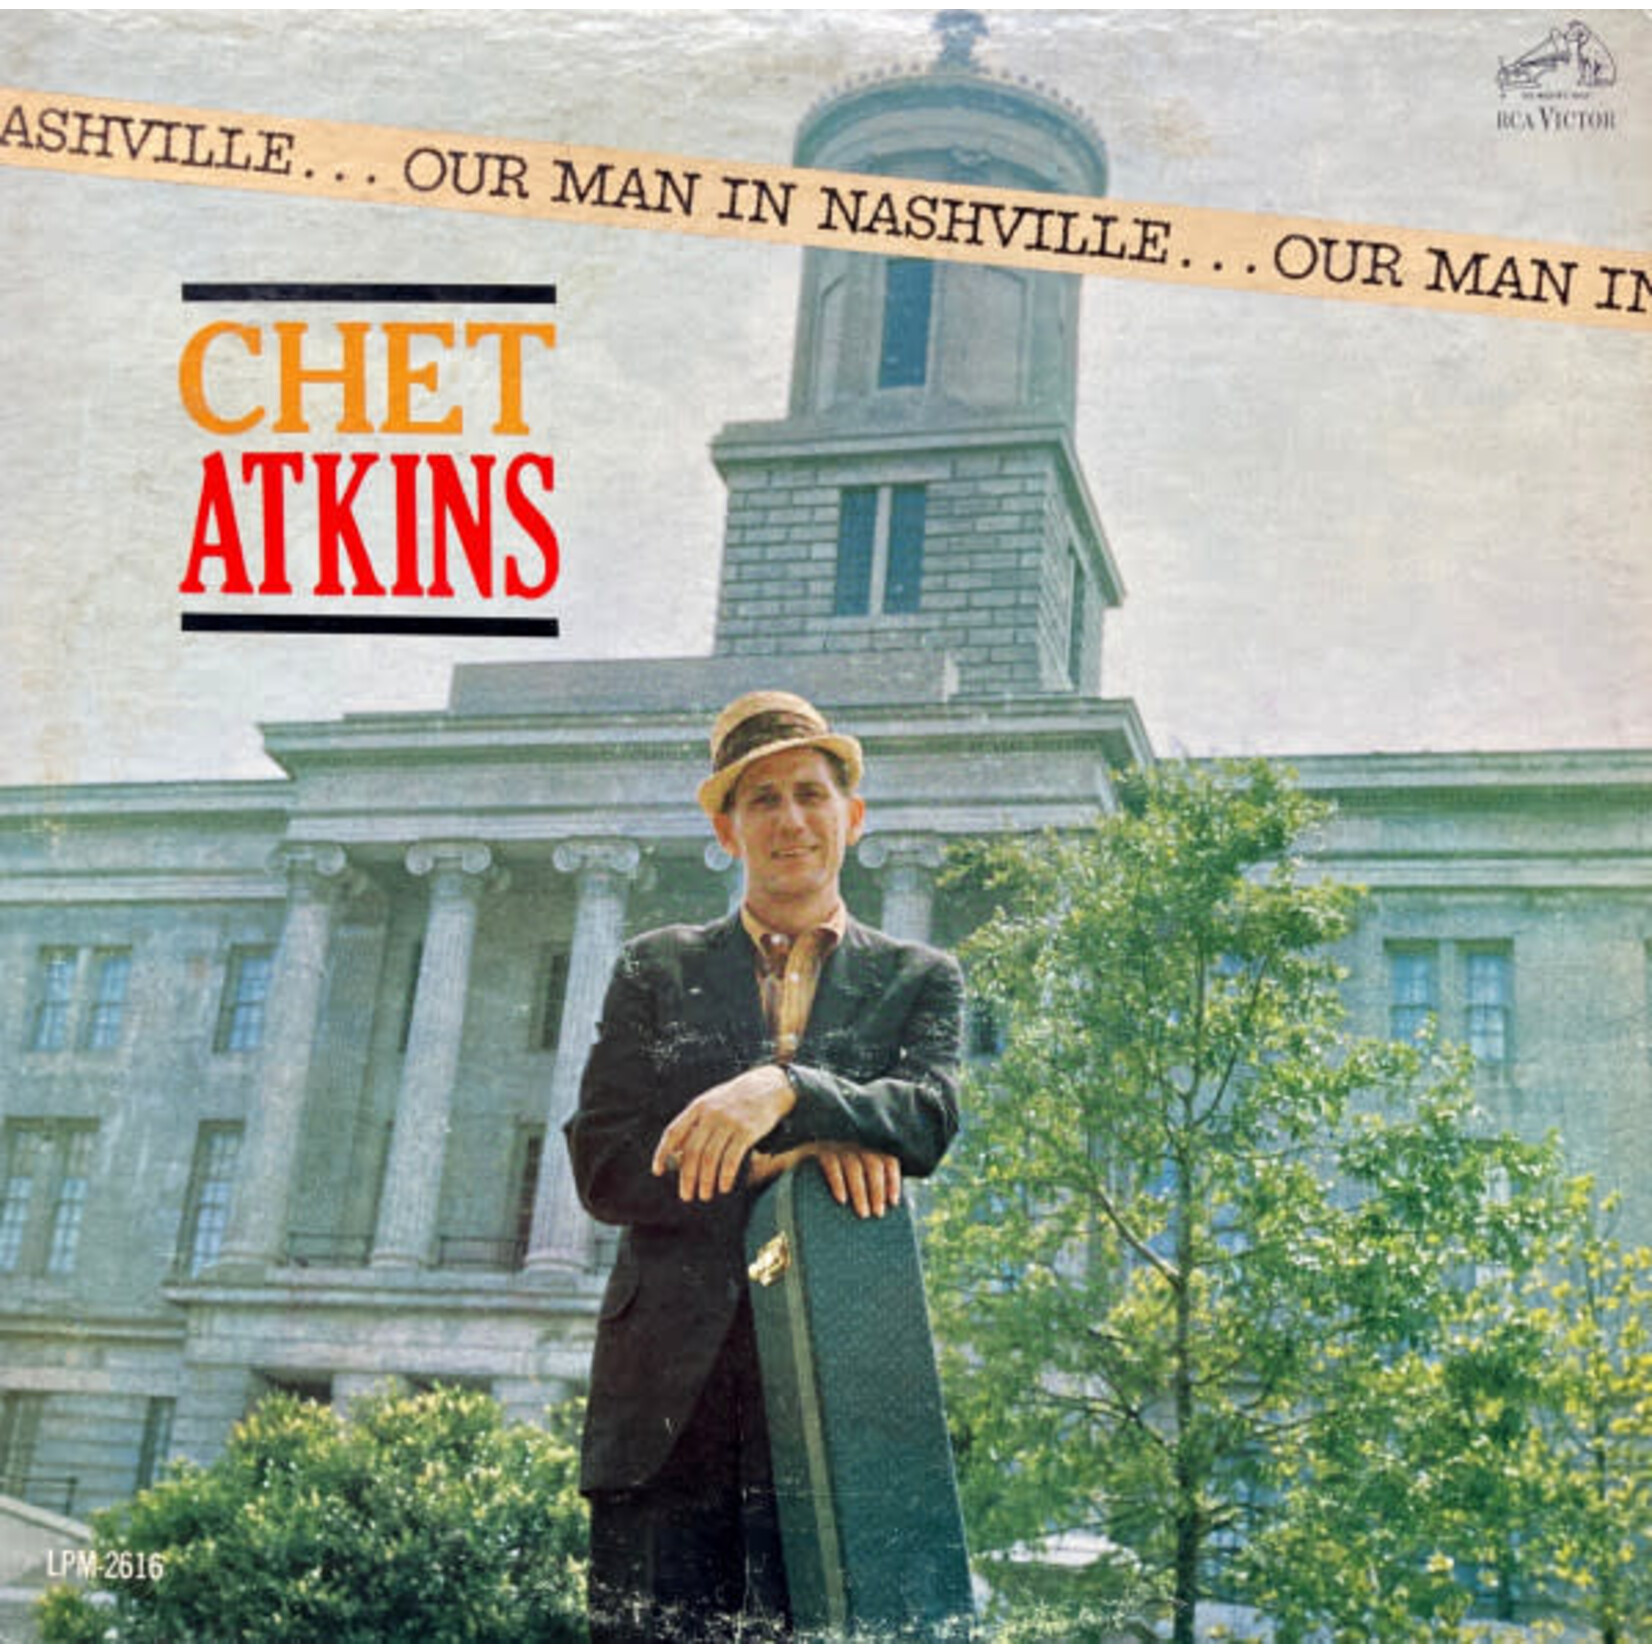 Chet Atkins Chet Atkins – Our Man In Nashville (VG, 1963, LP, Mono, RCA Victor – LPM-2616)